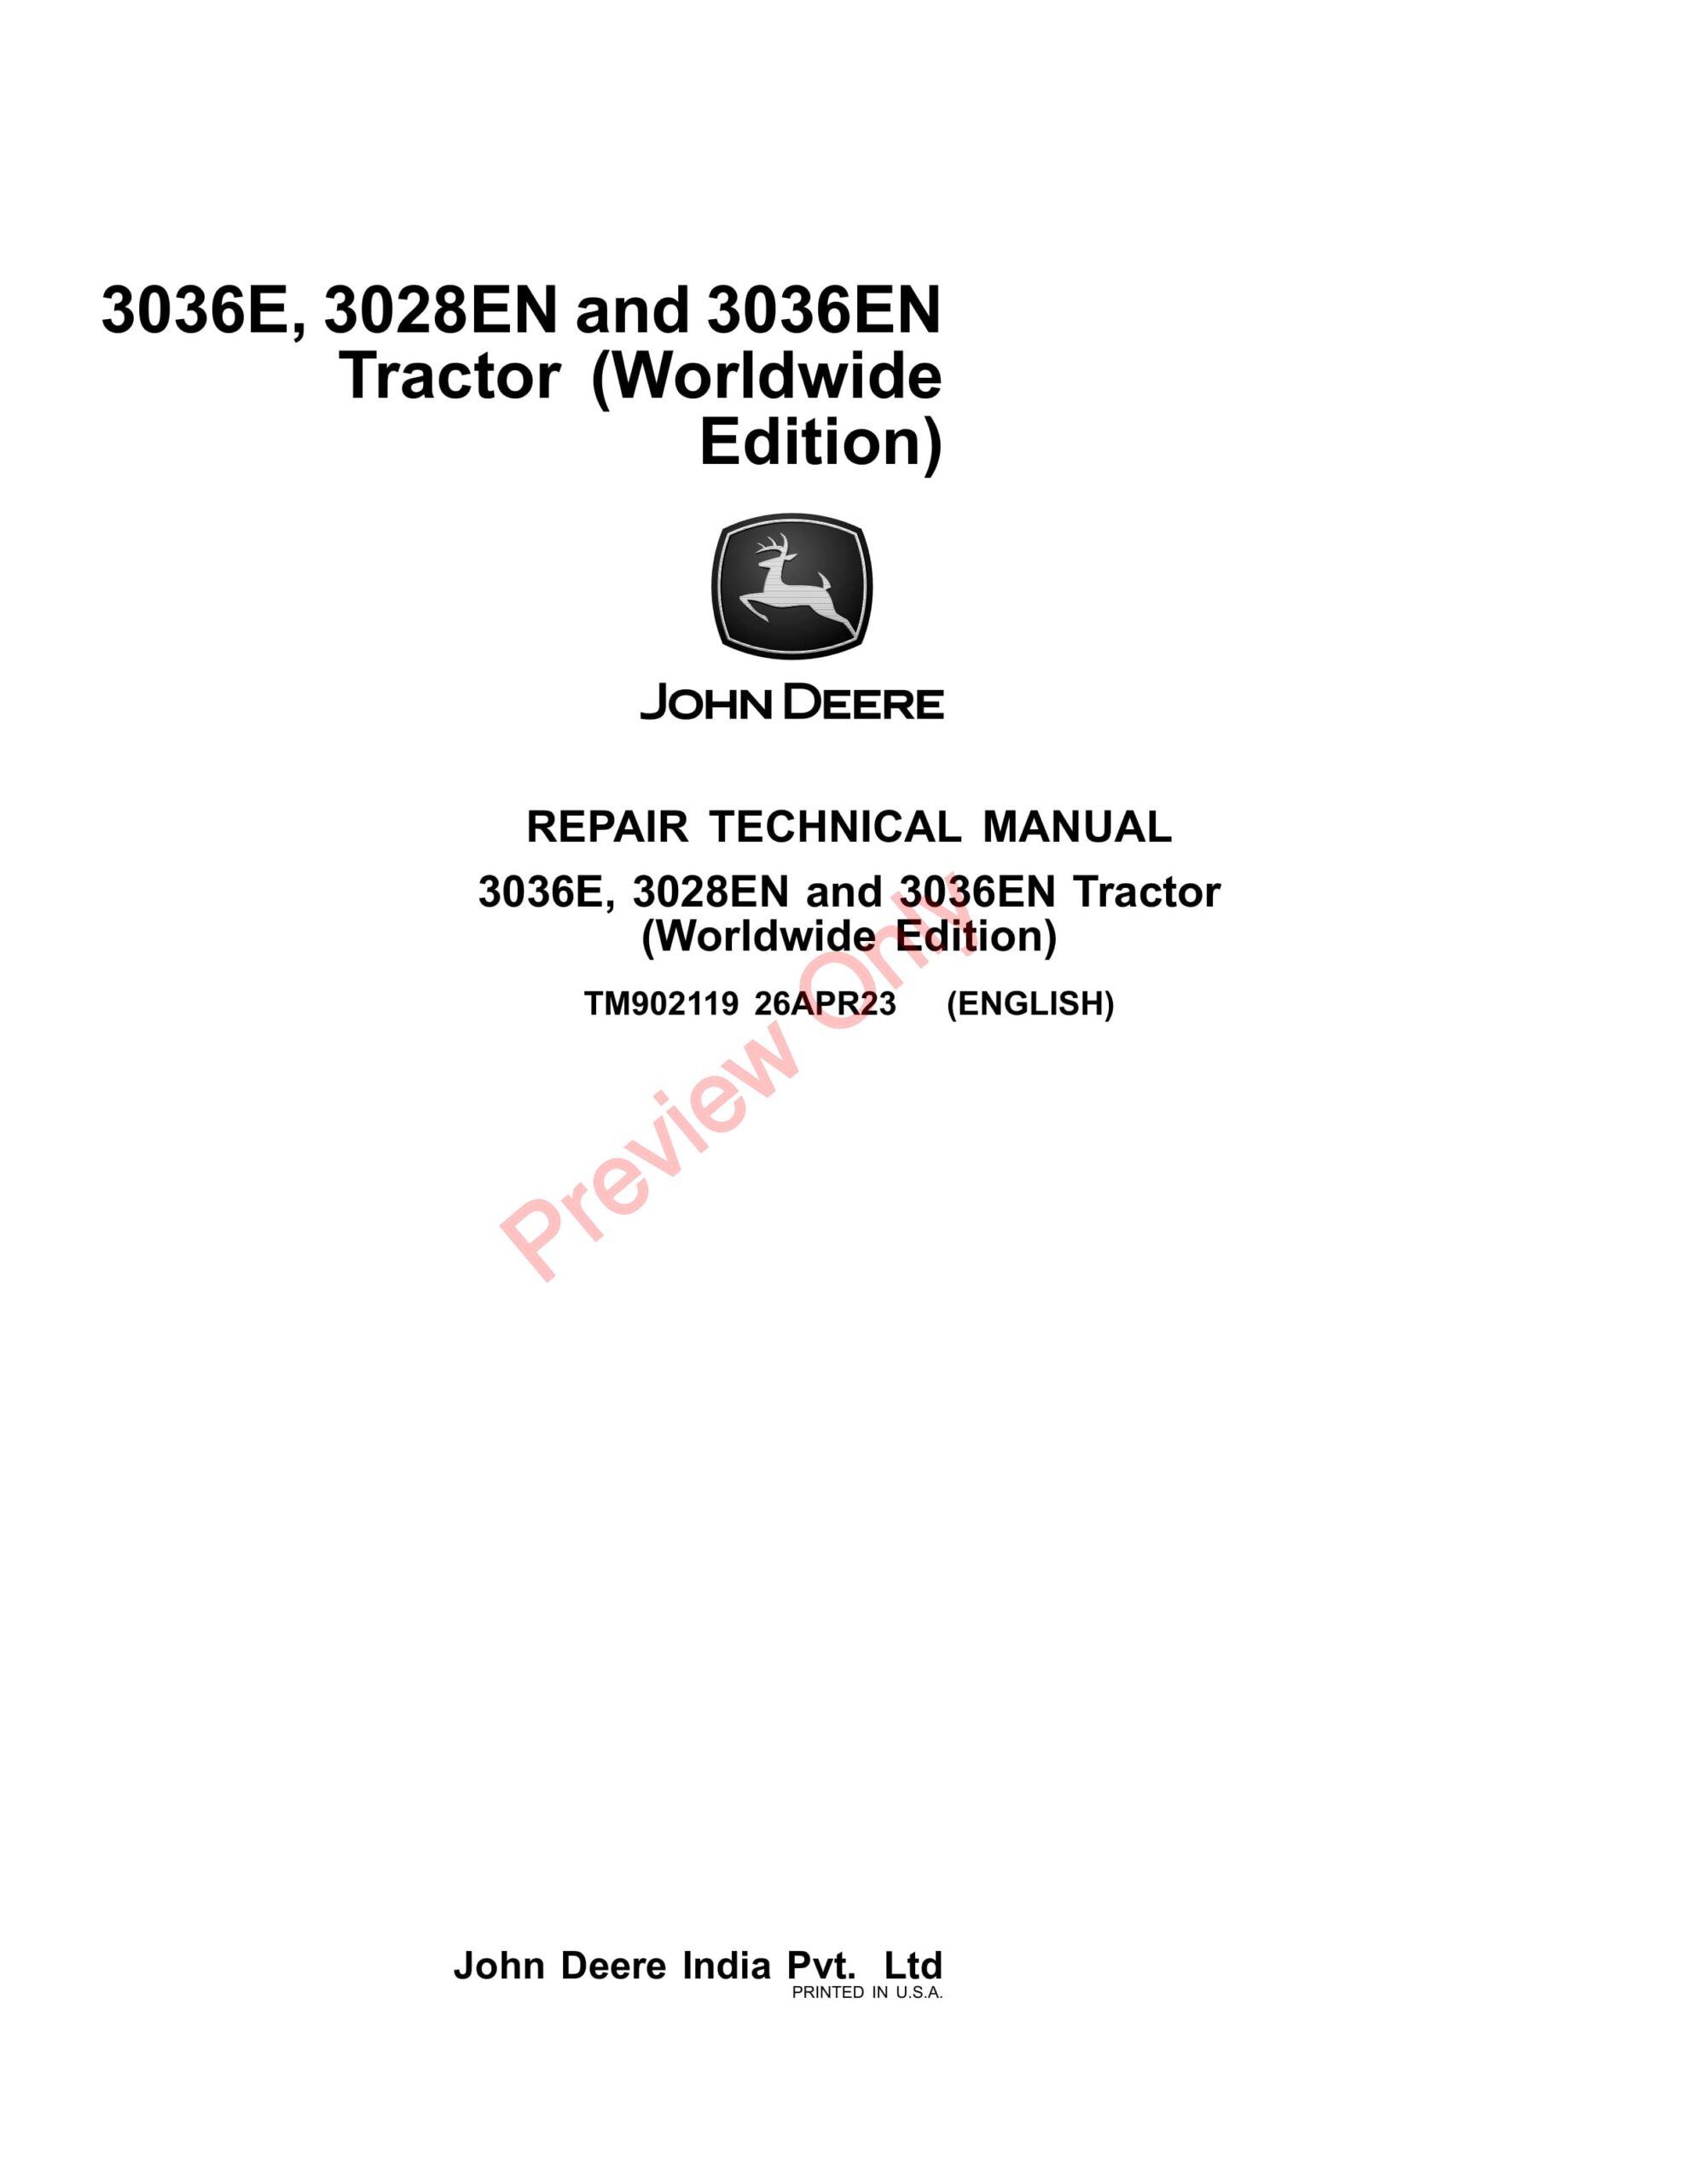 John Deere 3036E, 3028EN and 3036EN Tractor Repair Technical Manual TM902119 26APR23-1